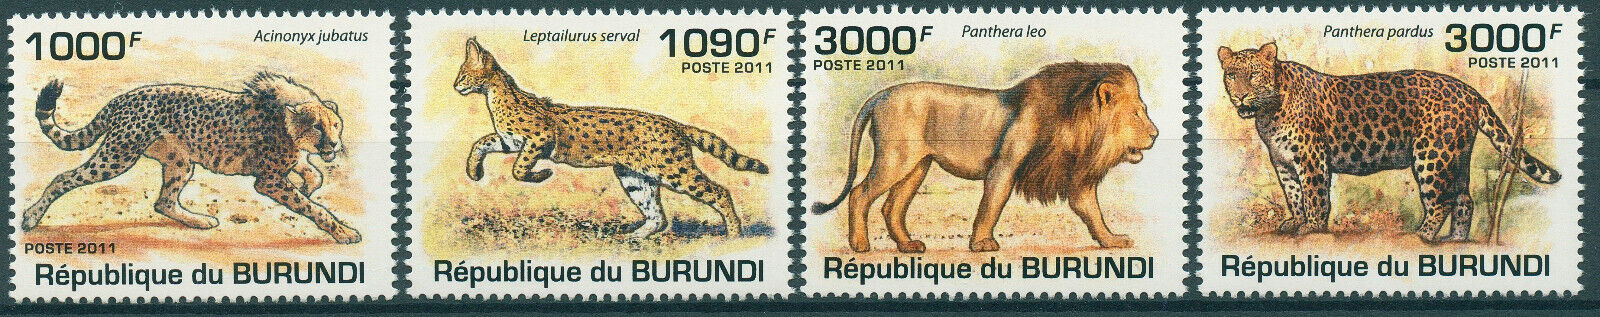 Burundi 2011 MNH Wild Animals Stamps Big Cats Lions Leopards Serval 4v Set